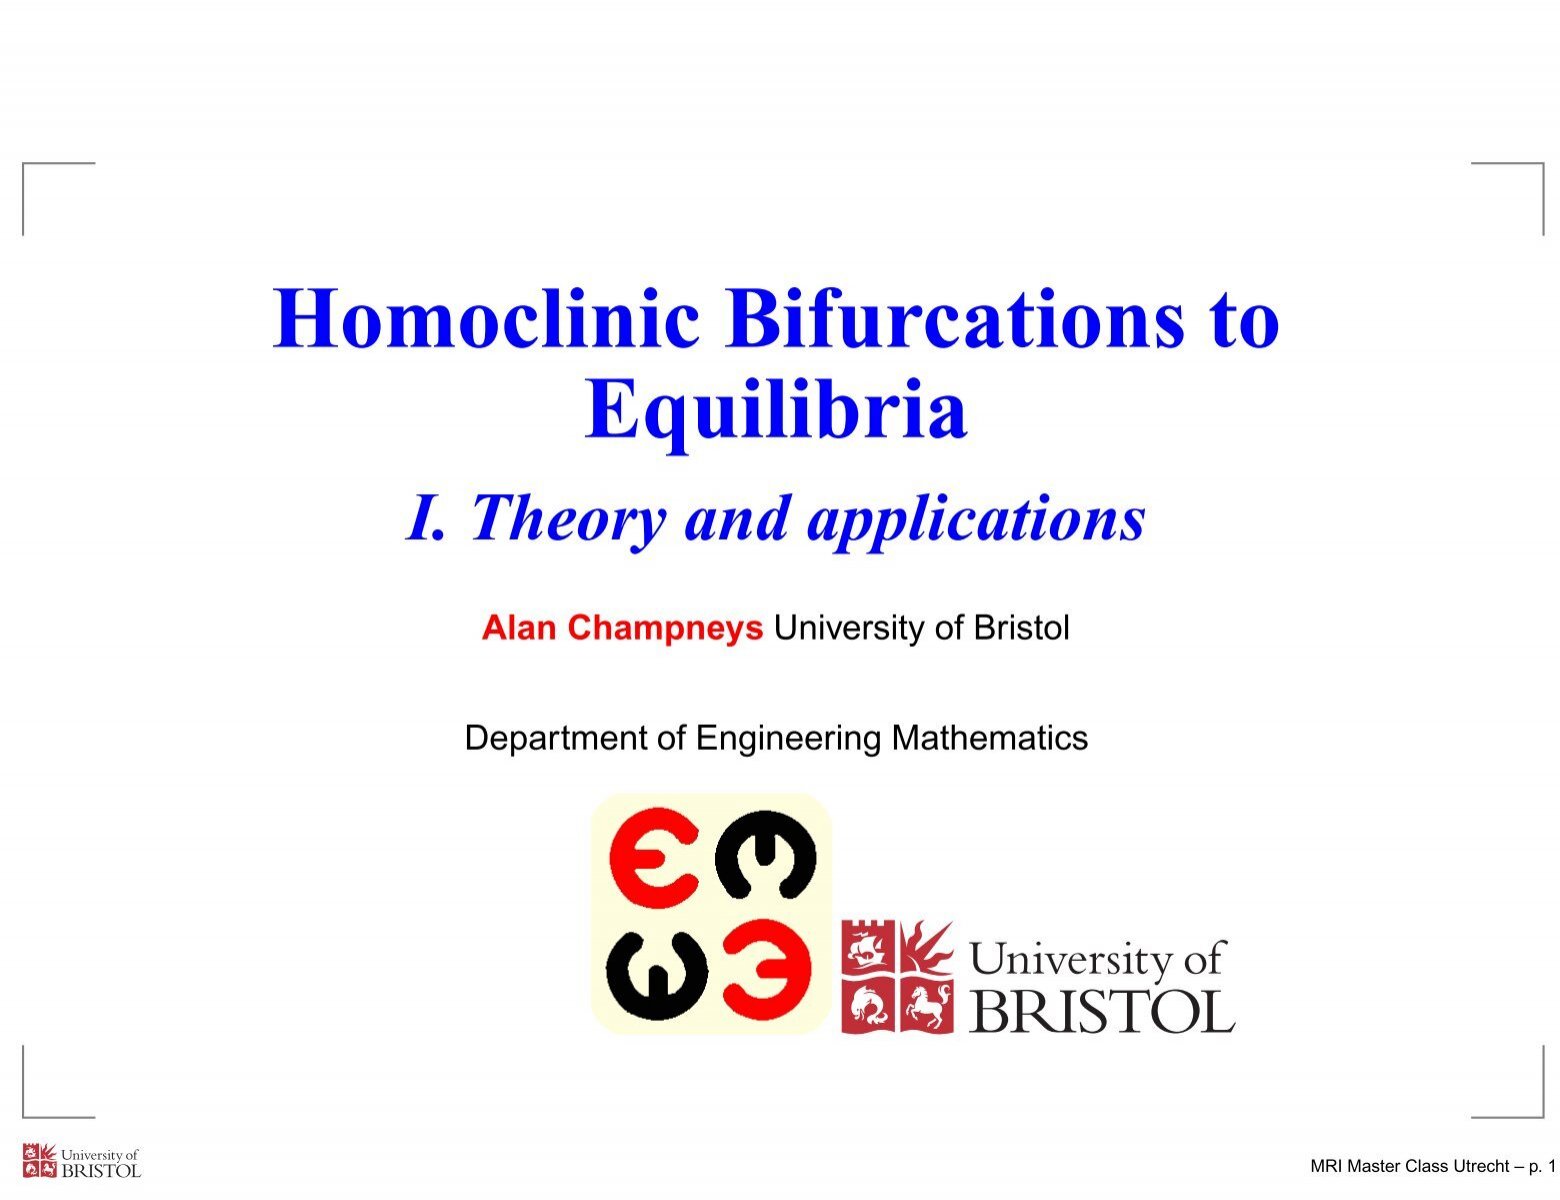 Homoclinic Bifurcations To Equilibria